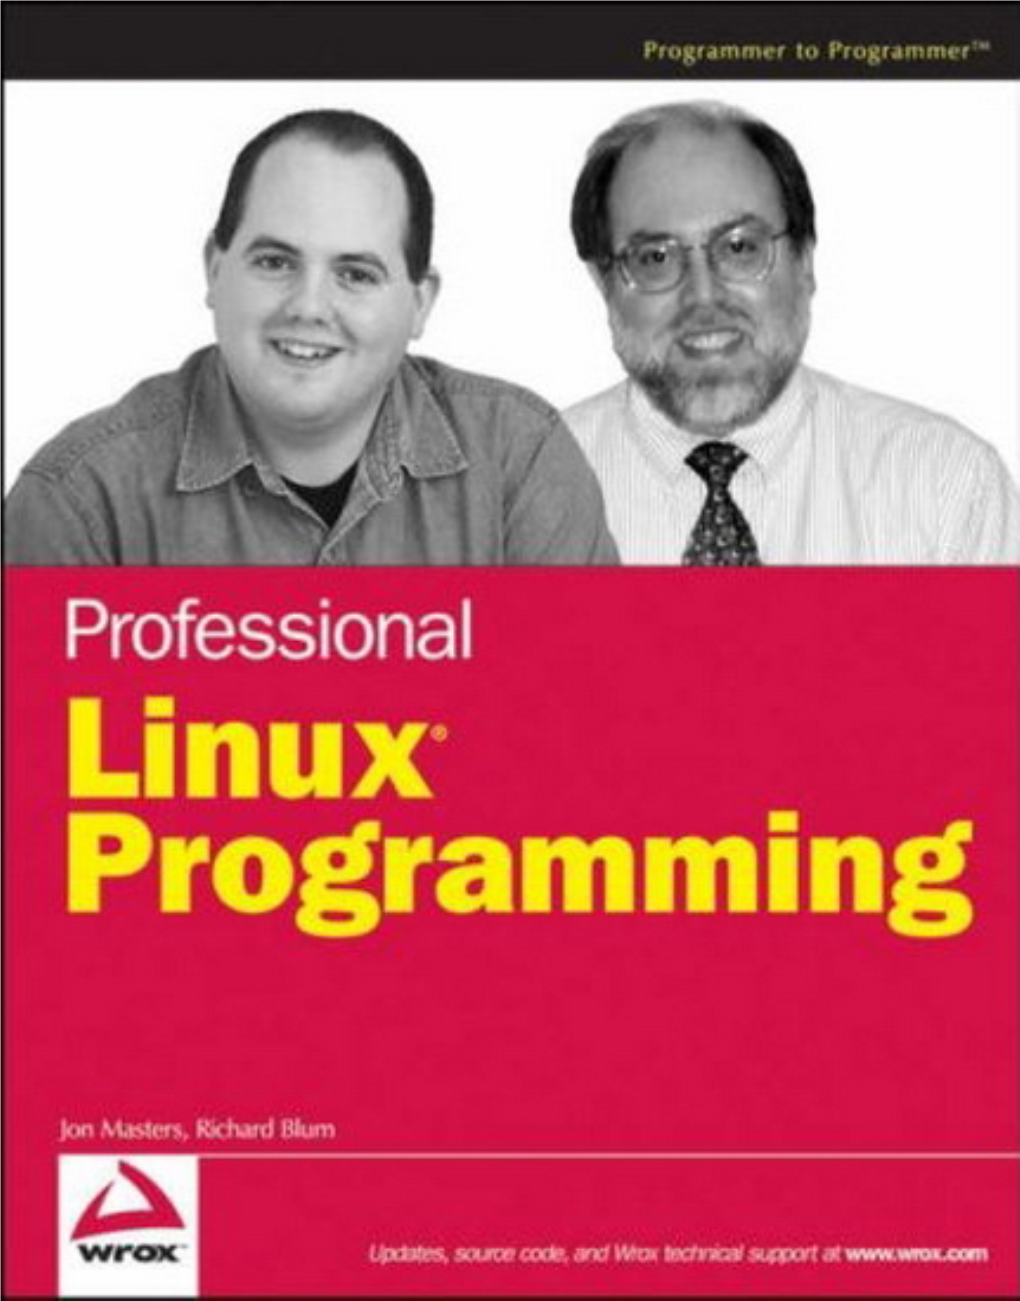 Professional Linux Programming.Pdf